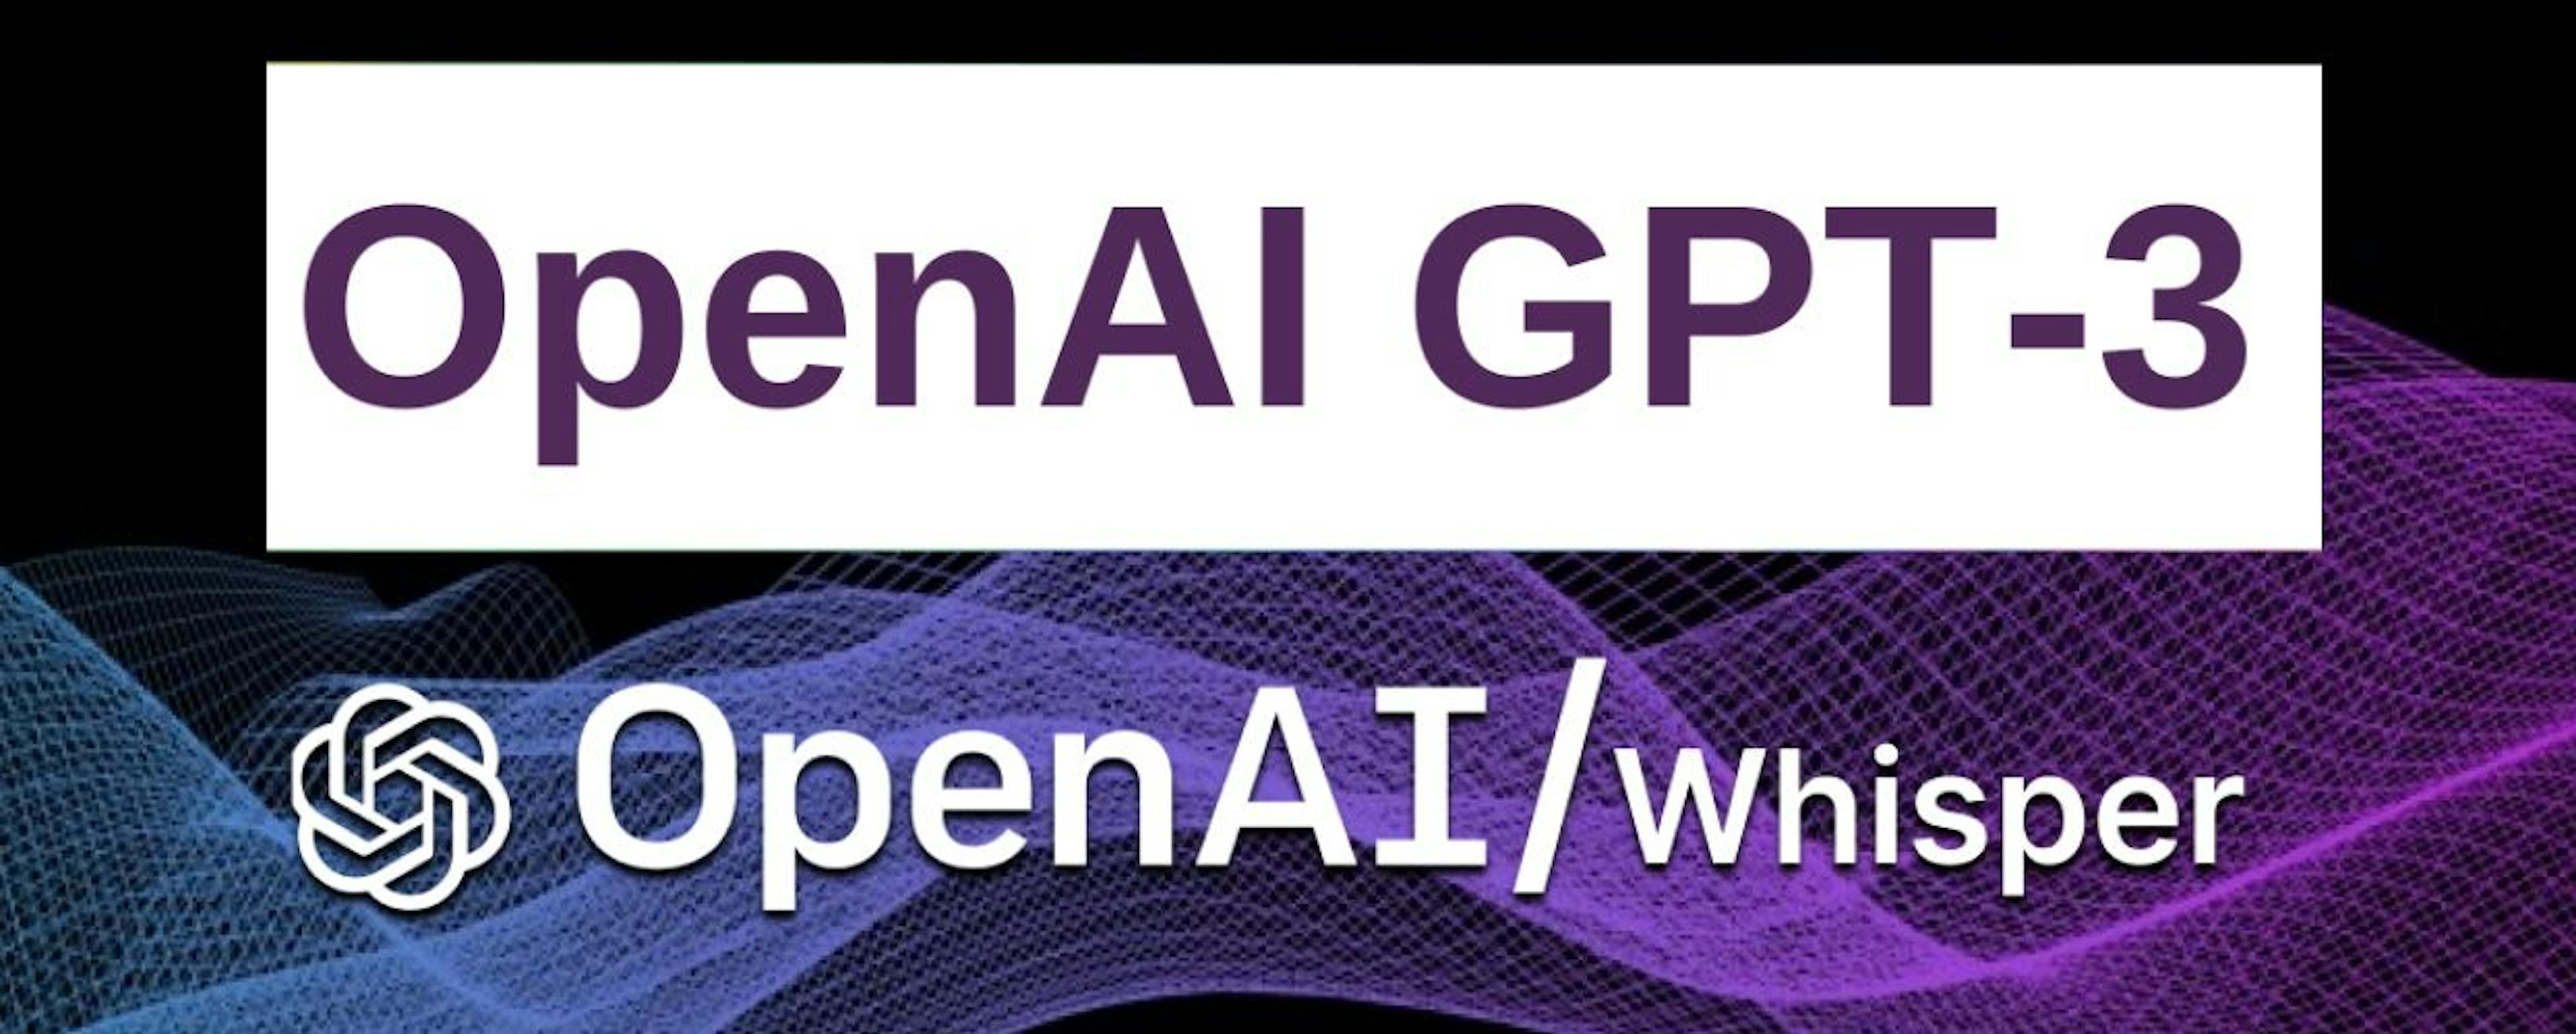 featured image - 使用 OpenAI 的 Whisper 和 GPT-3 API 构建和部署 Transcriber 应用程序 - 第 1 部分